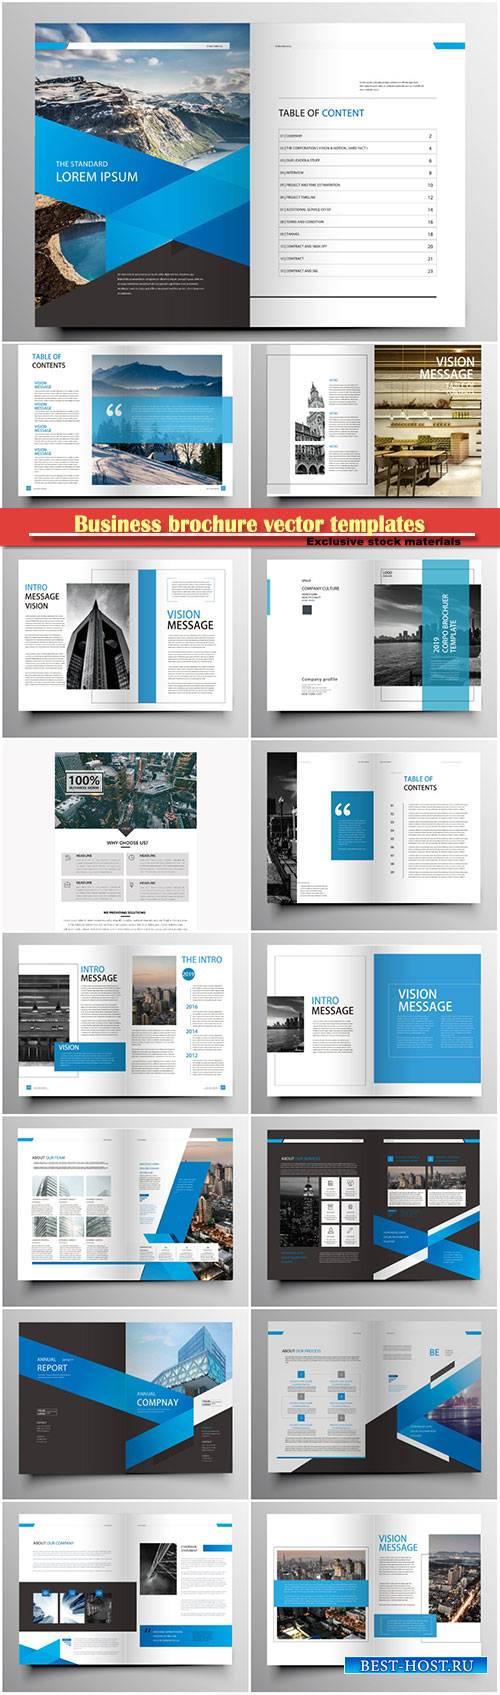 Business brochure vector templates, magazine cover, business mockup, education, presentation, report # 69